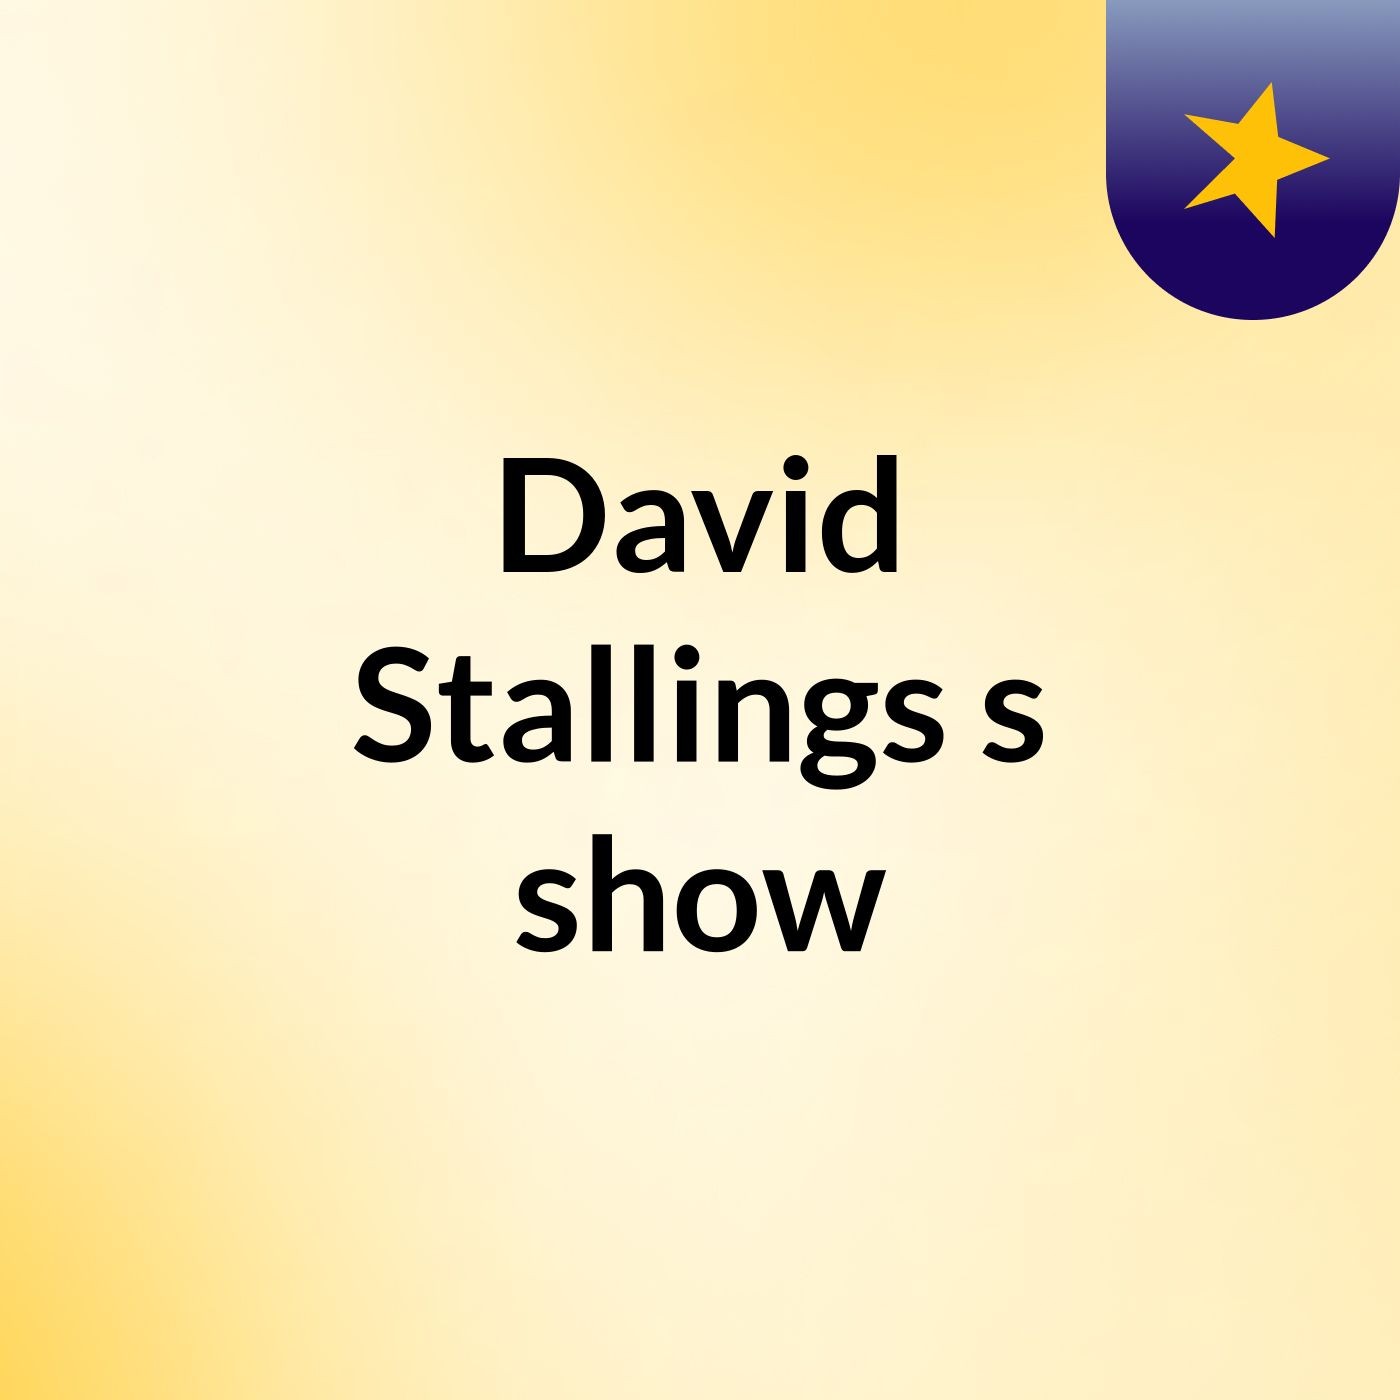 Episode 2 - David Stallings's show